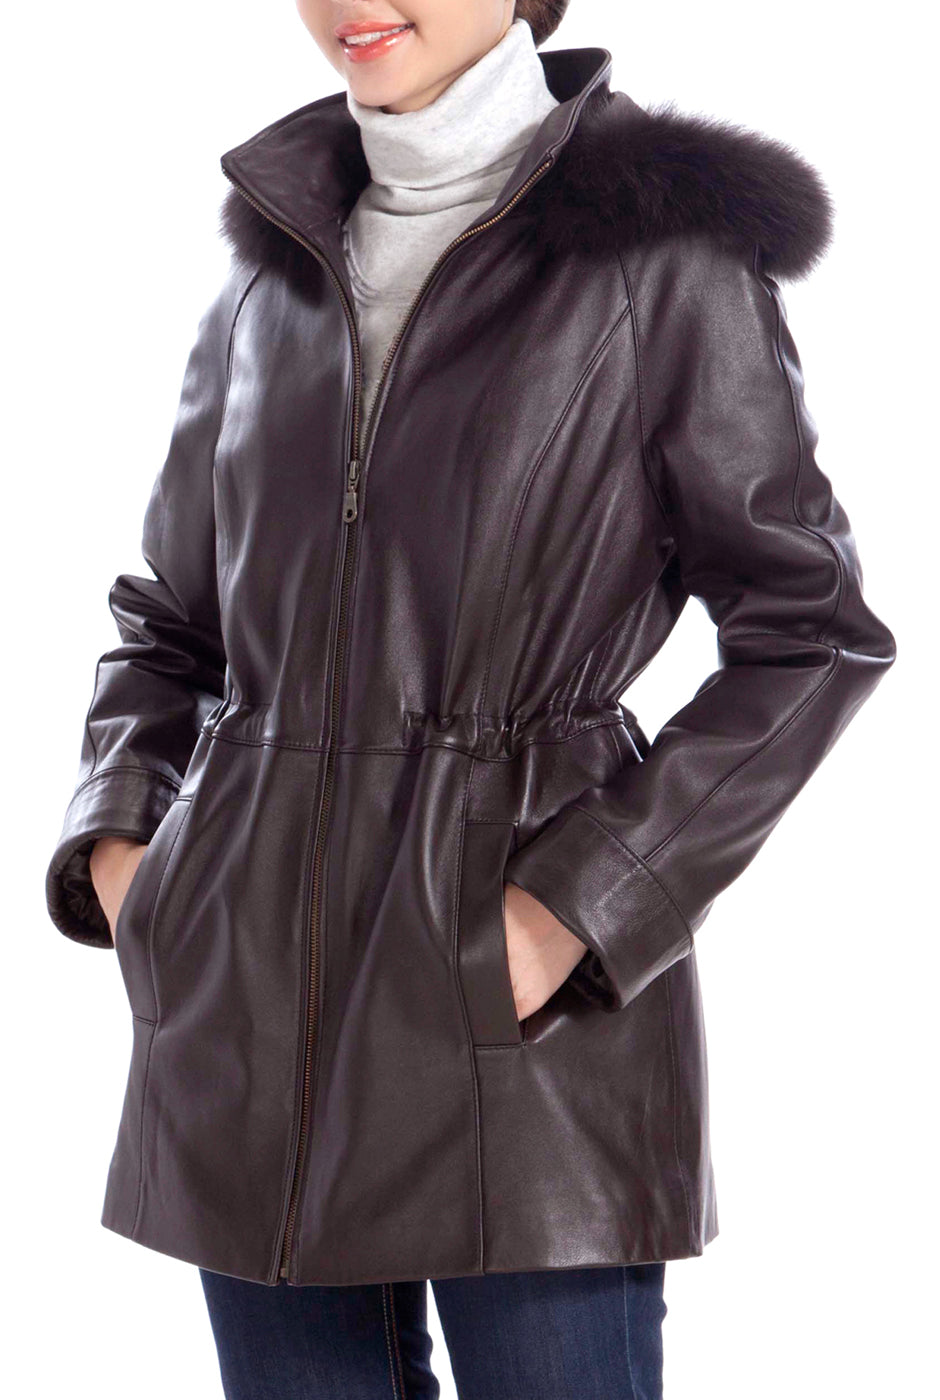 BGSD Women Lambskin Leather Hooded Parka Coat